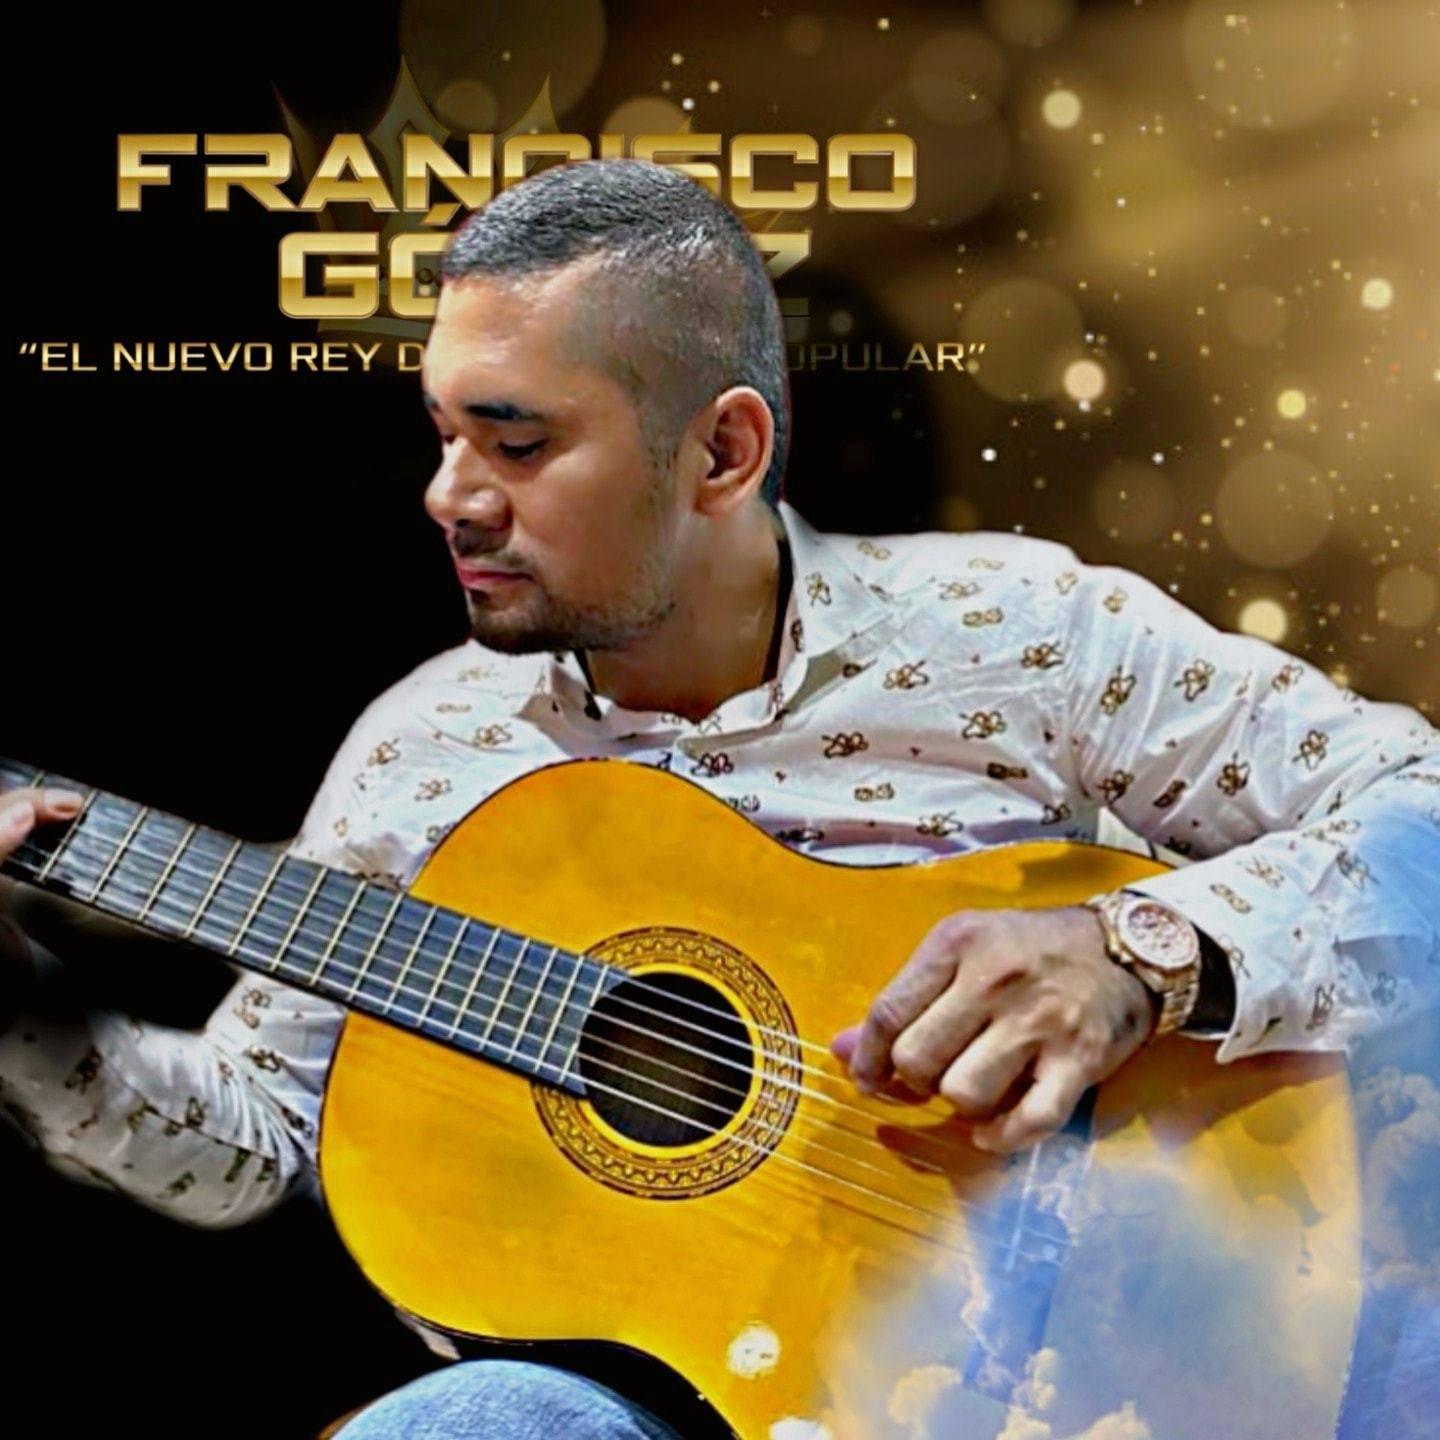 Francisco Gomez